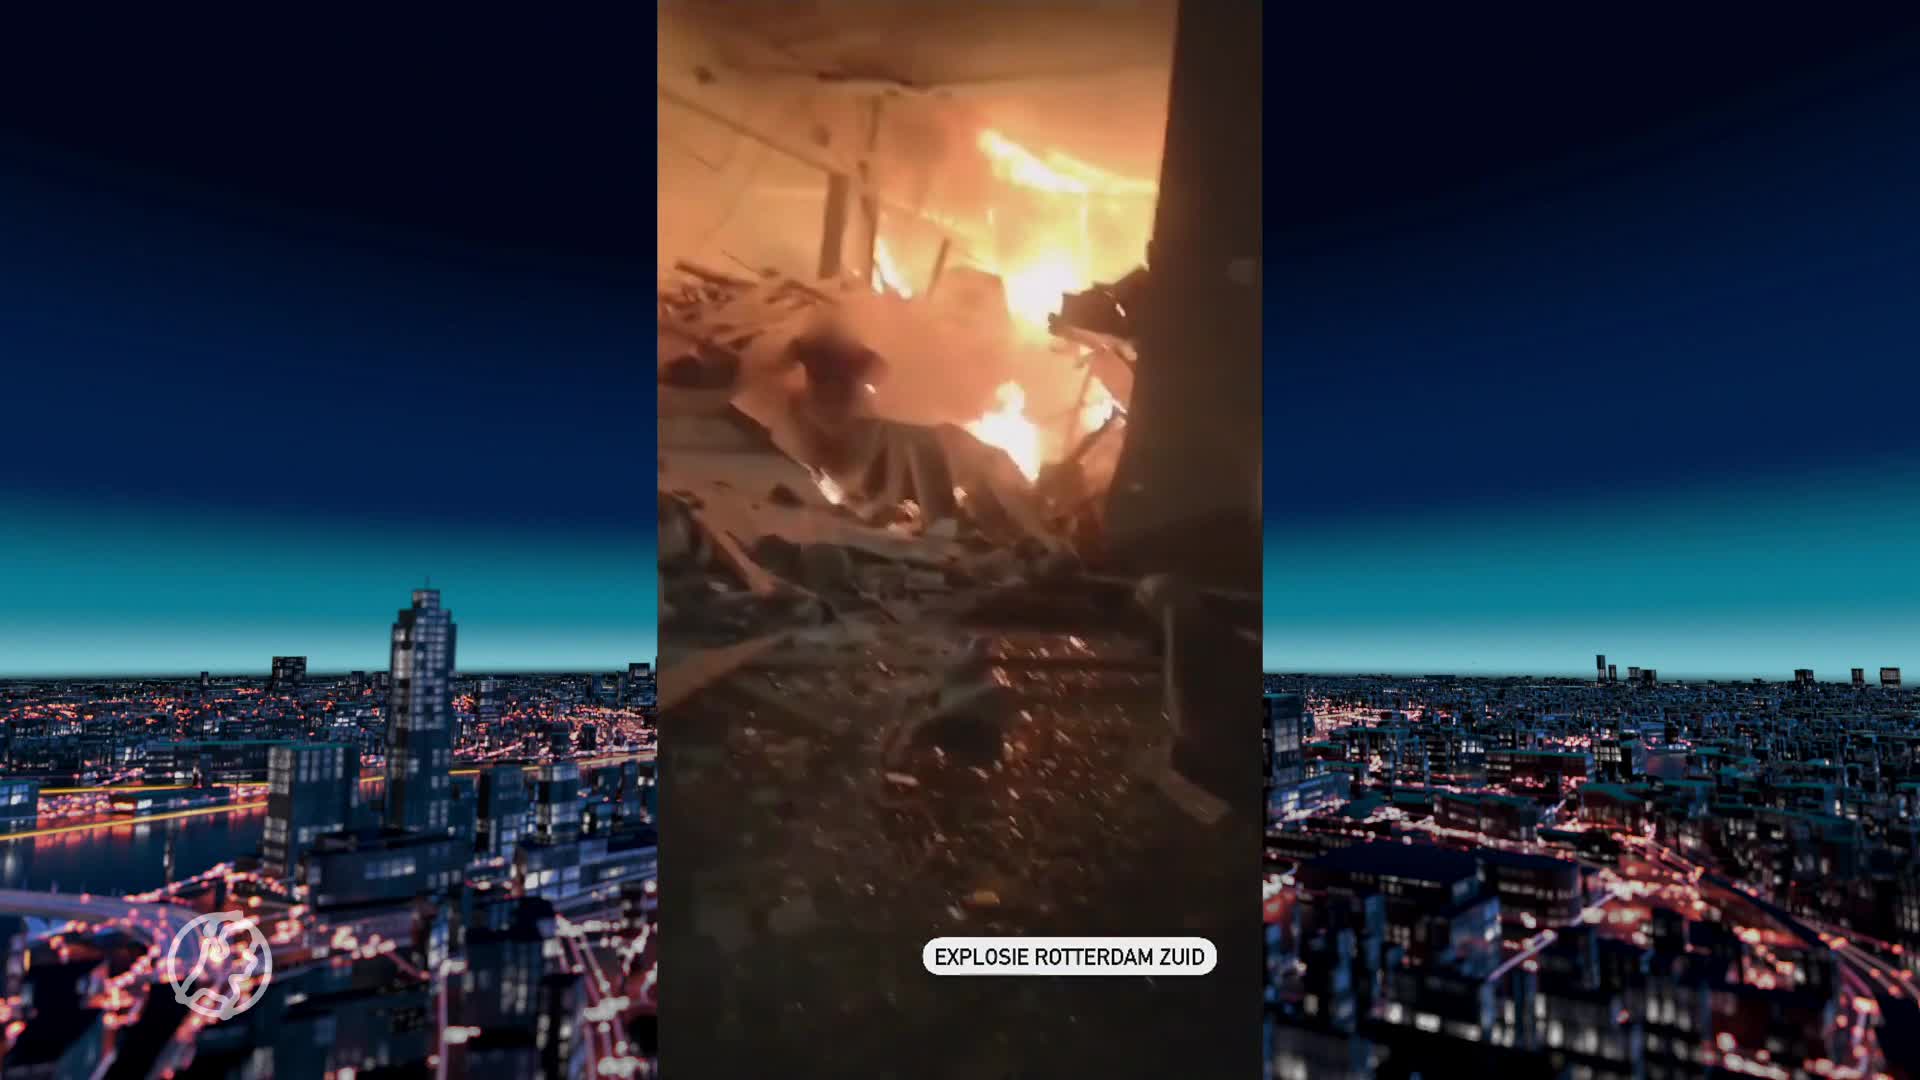 Heftig beeld: man ontsnapt uit vuur na explosie Rotterdam 